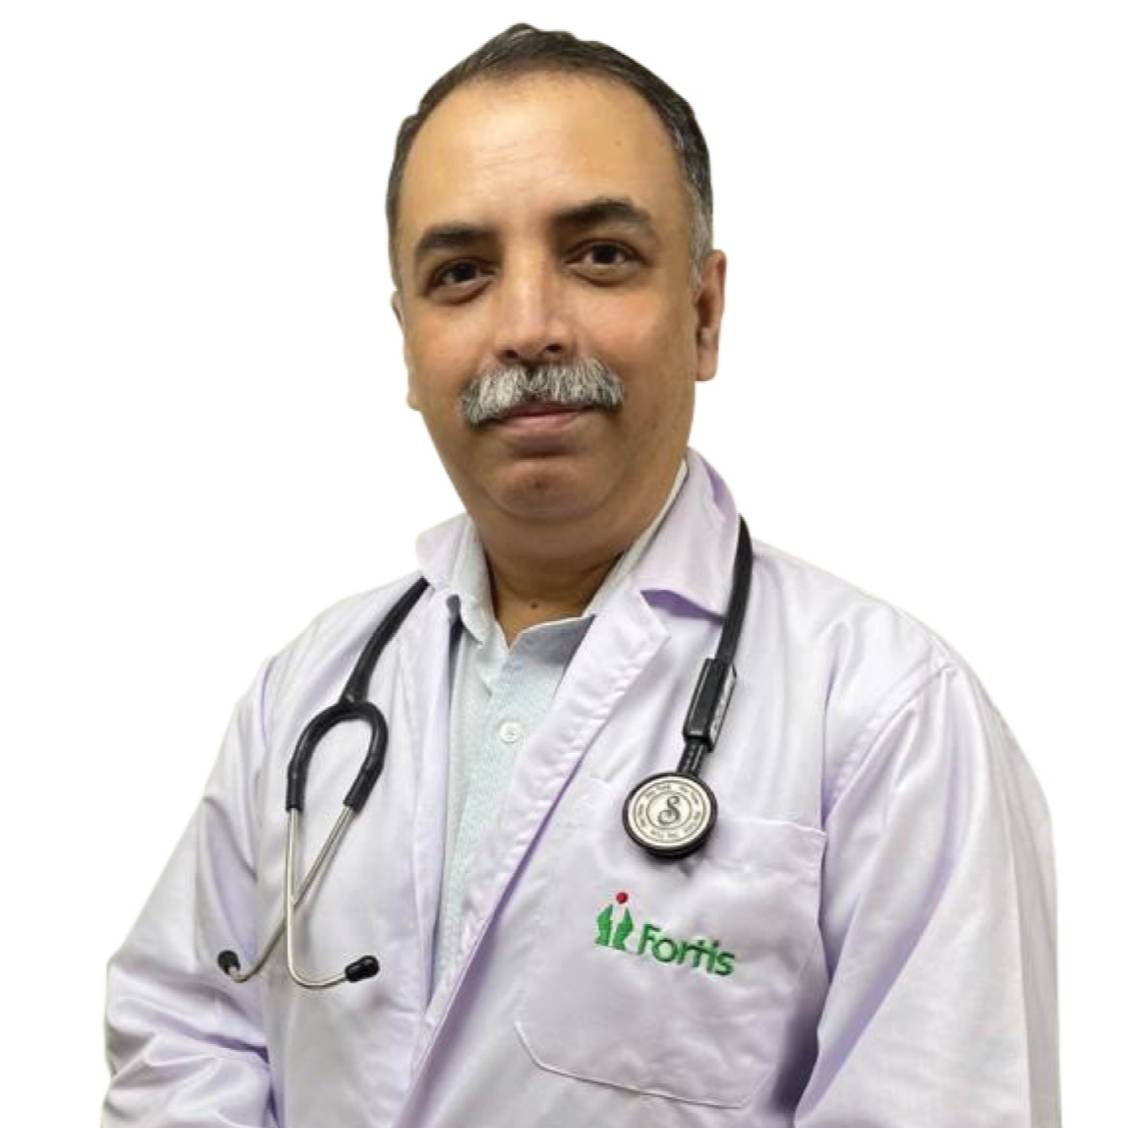 Ashok Borisa博士